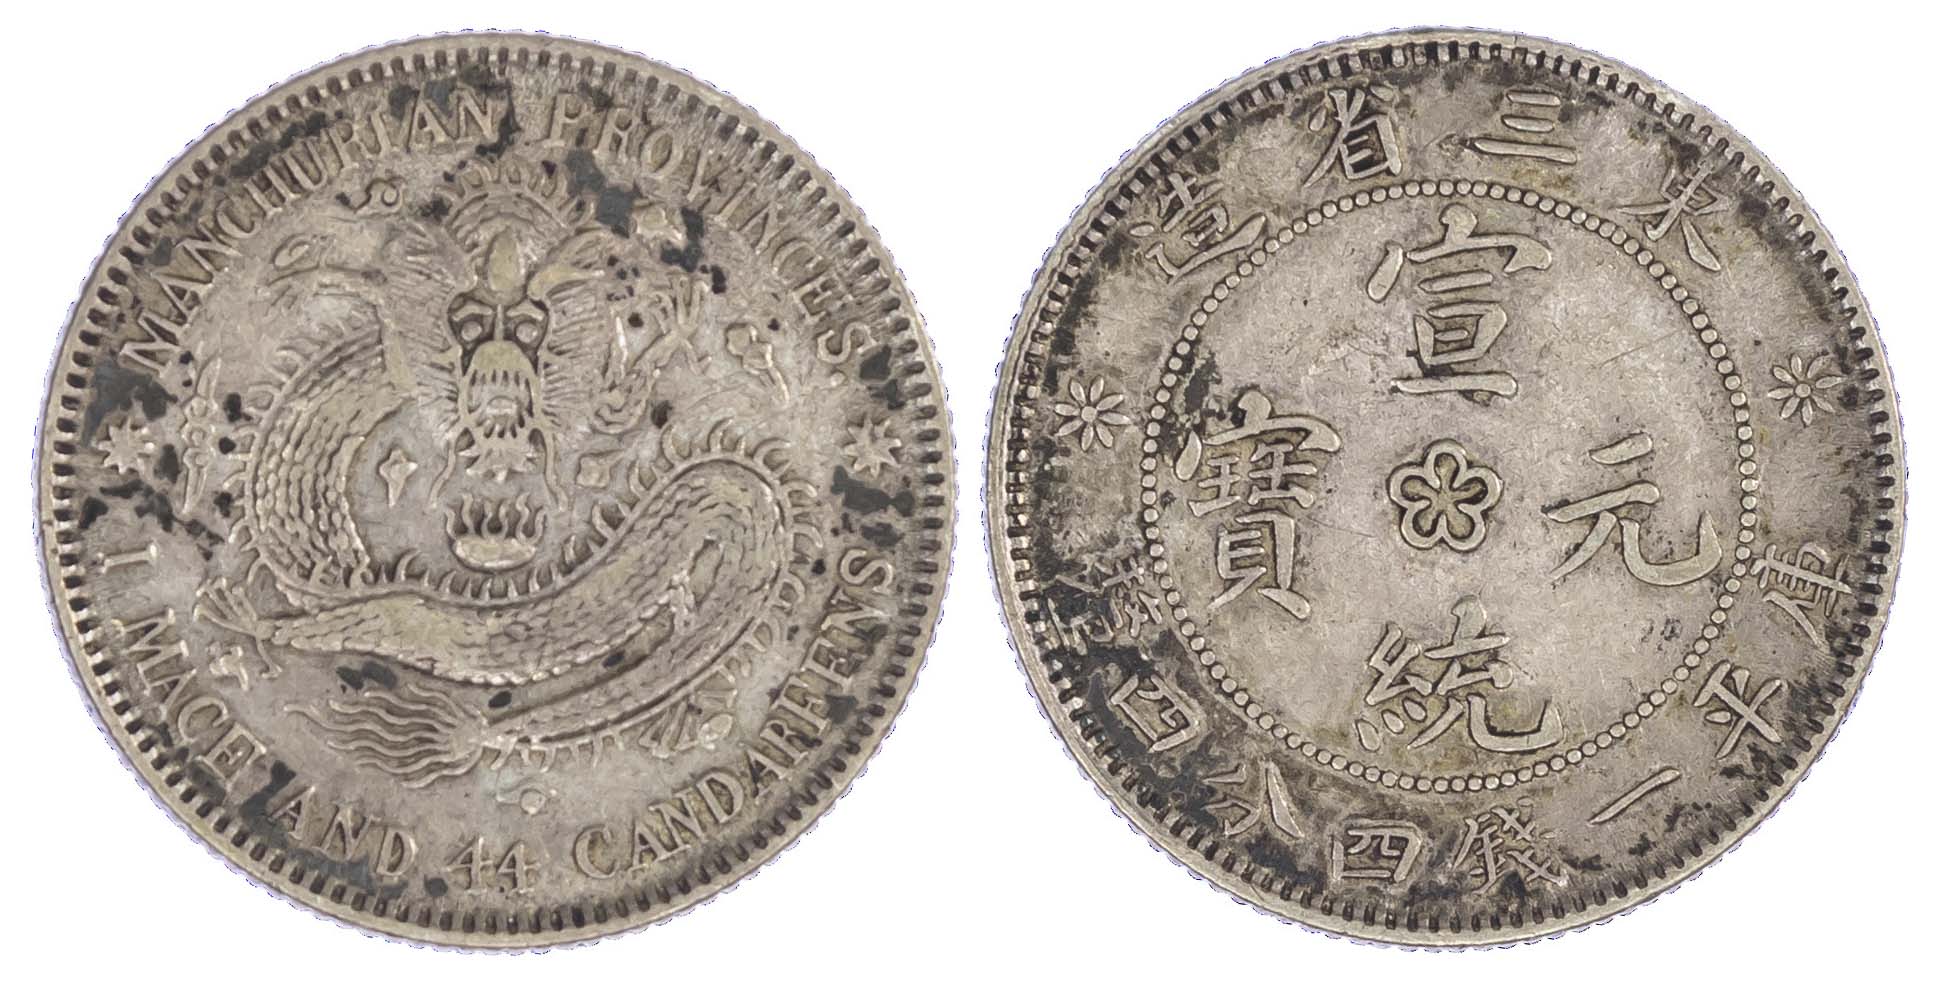 China, Manchurian Provinces (1909-1915), silver 20 Cents